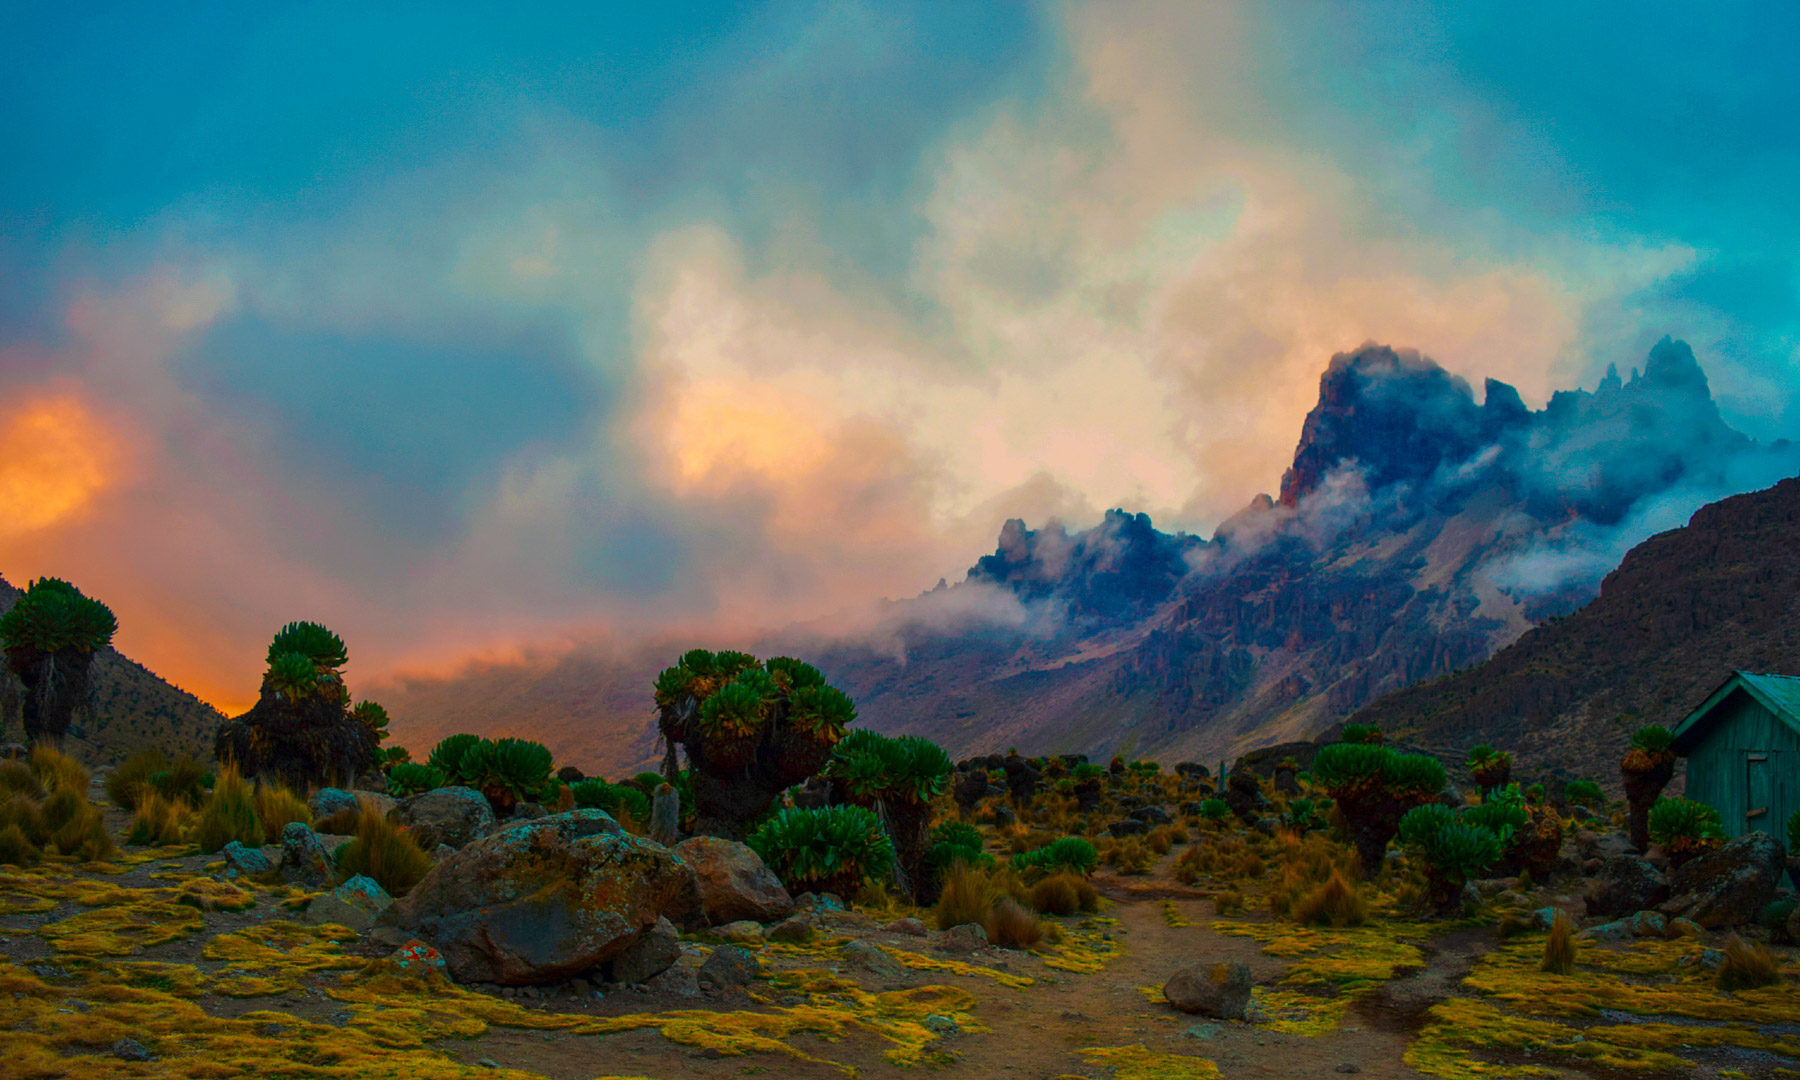 How to Take a Self-Guided Hike up Mount Kenya